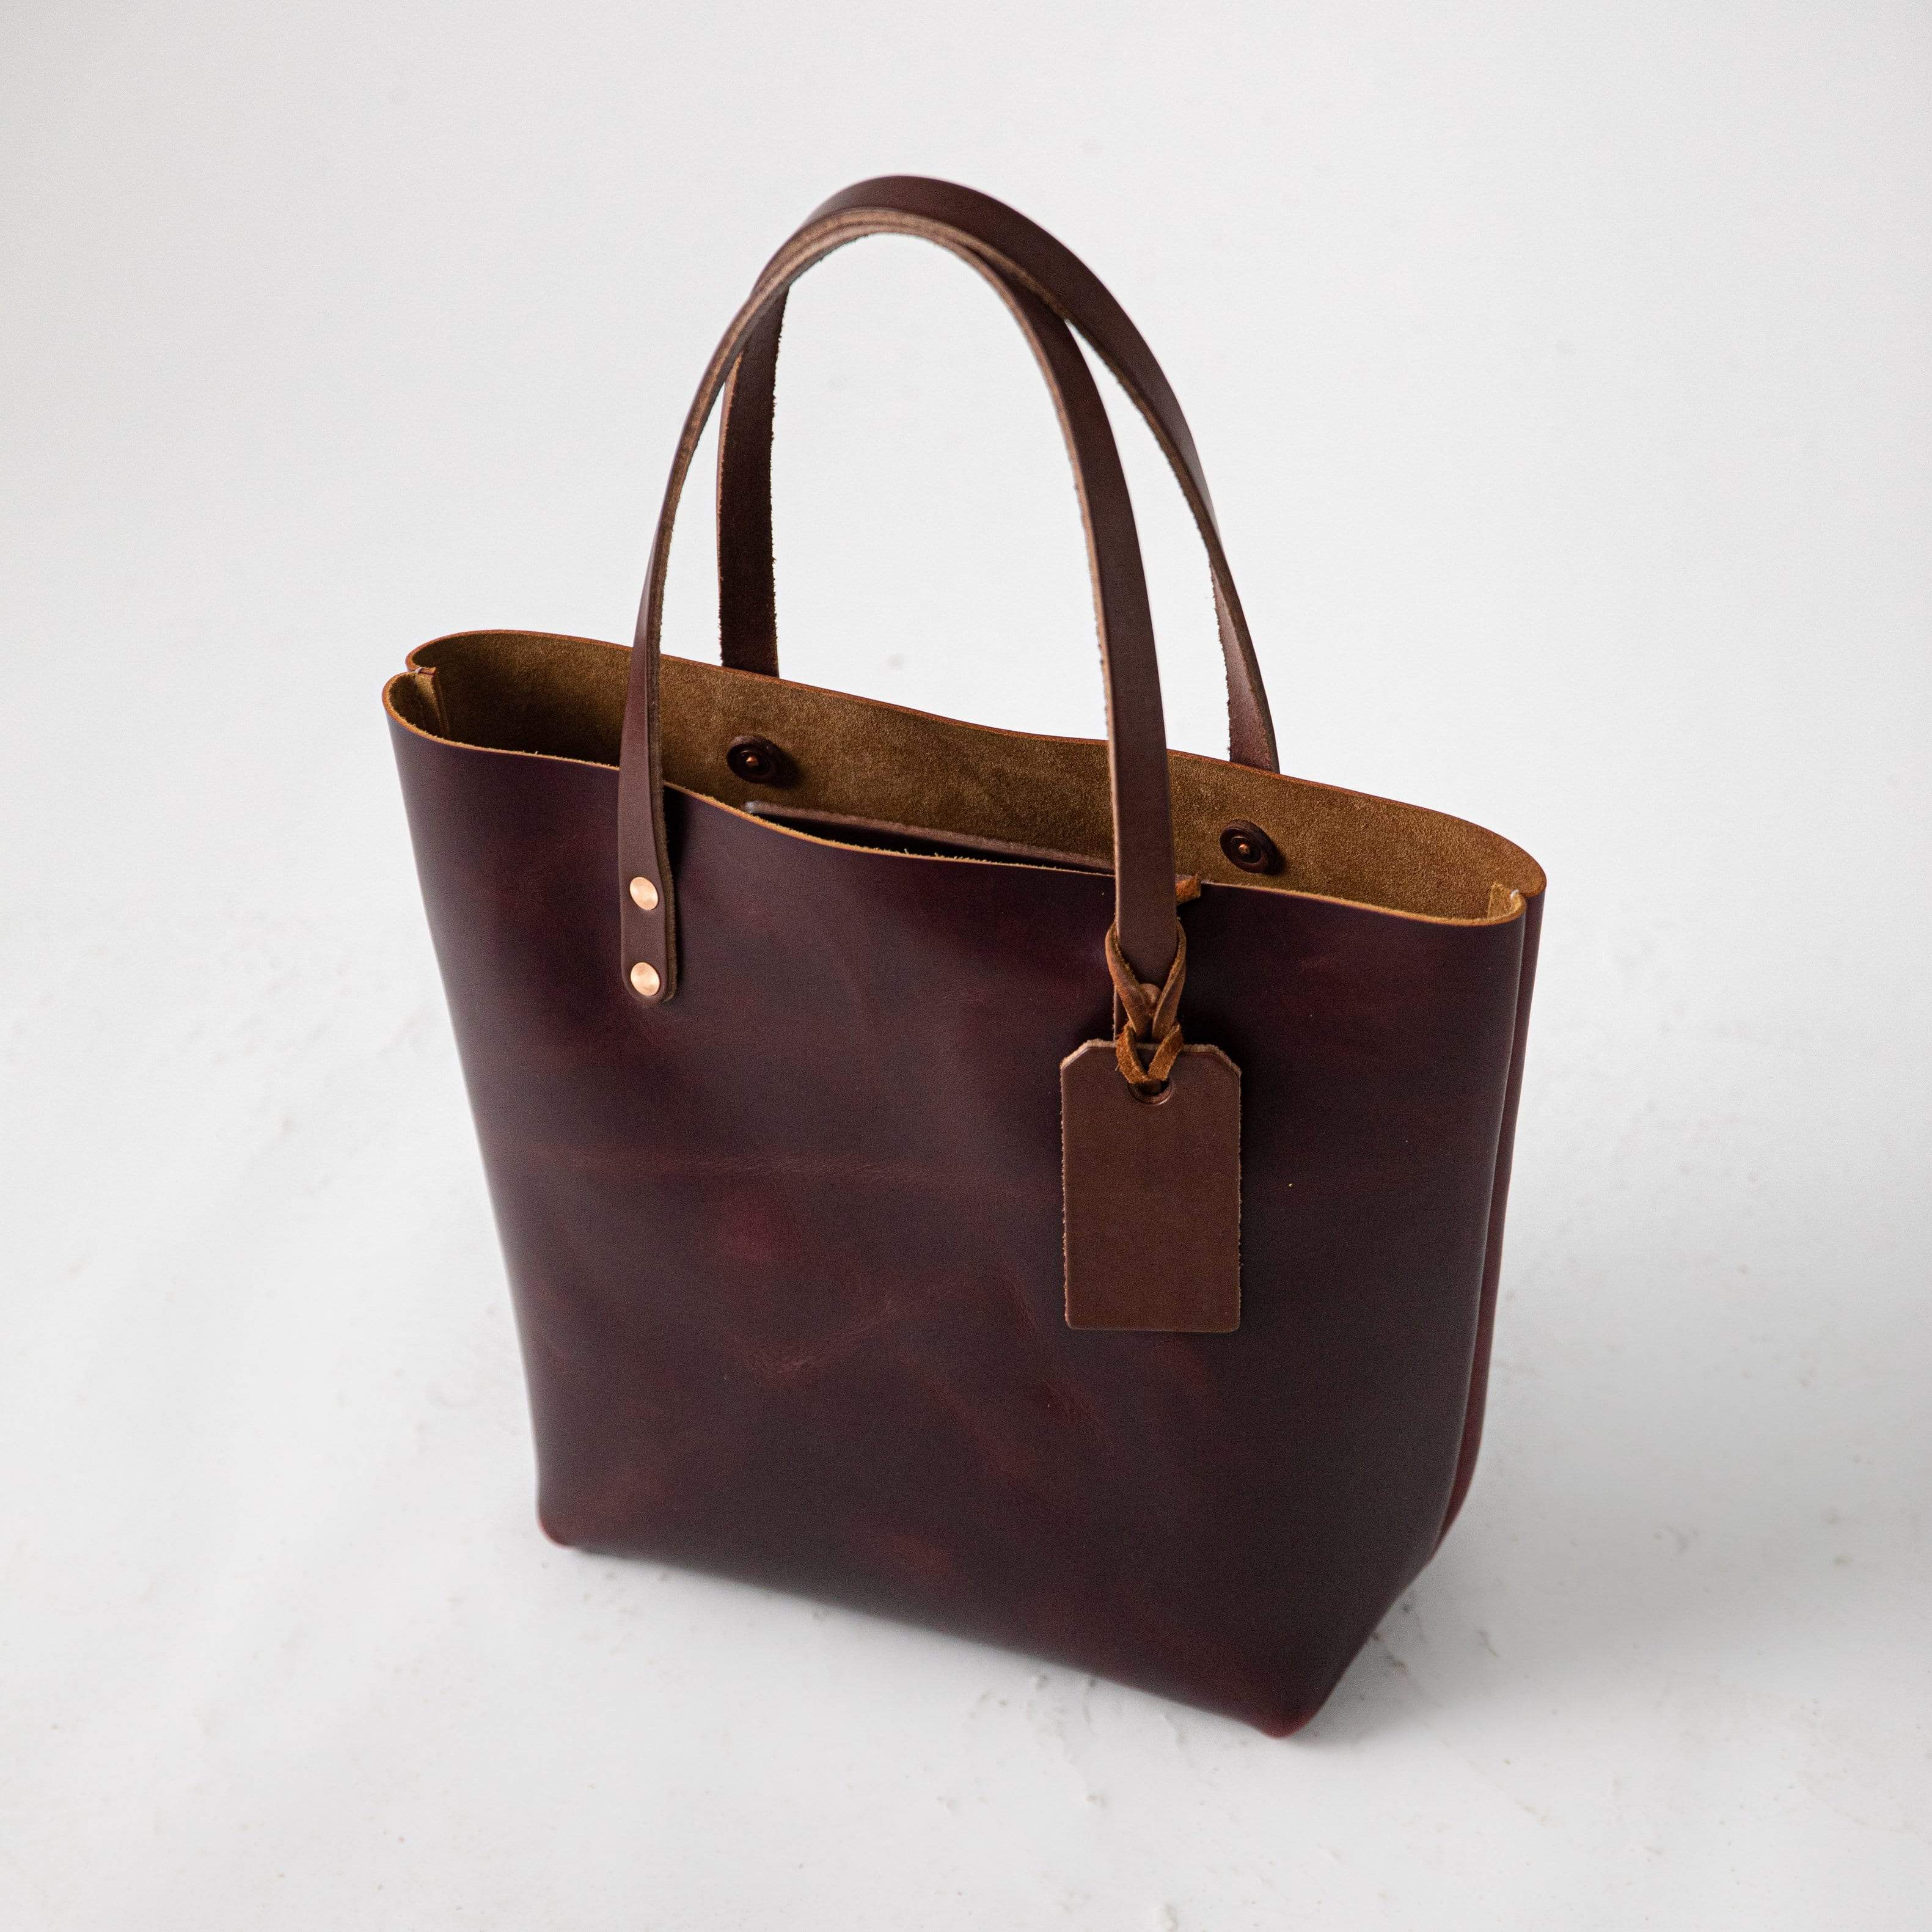 Oxblood Tote- burgundy handbag handmade in America